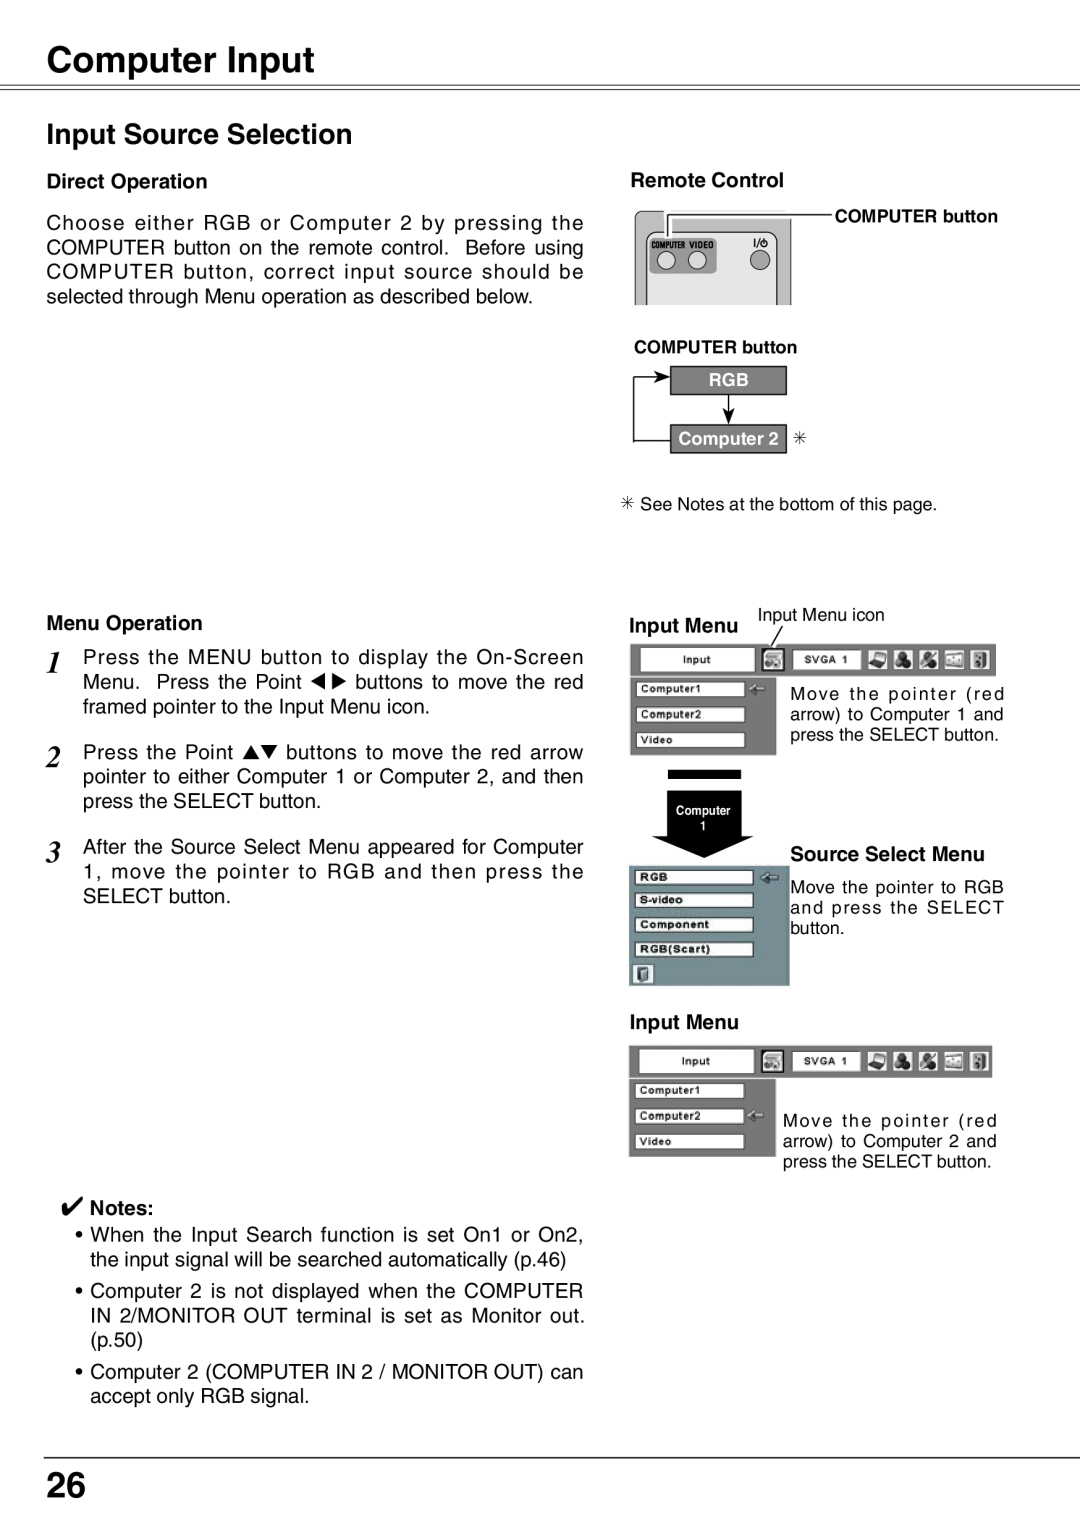 Eiki LC-XD25 Computer Input, Input Source Selection, Direct Operation, Menu Operation, Remote Control, Source Select Menu 